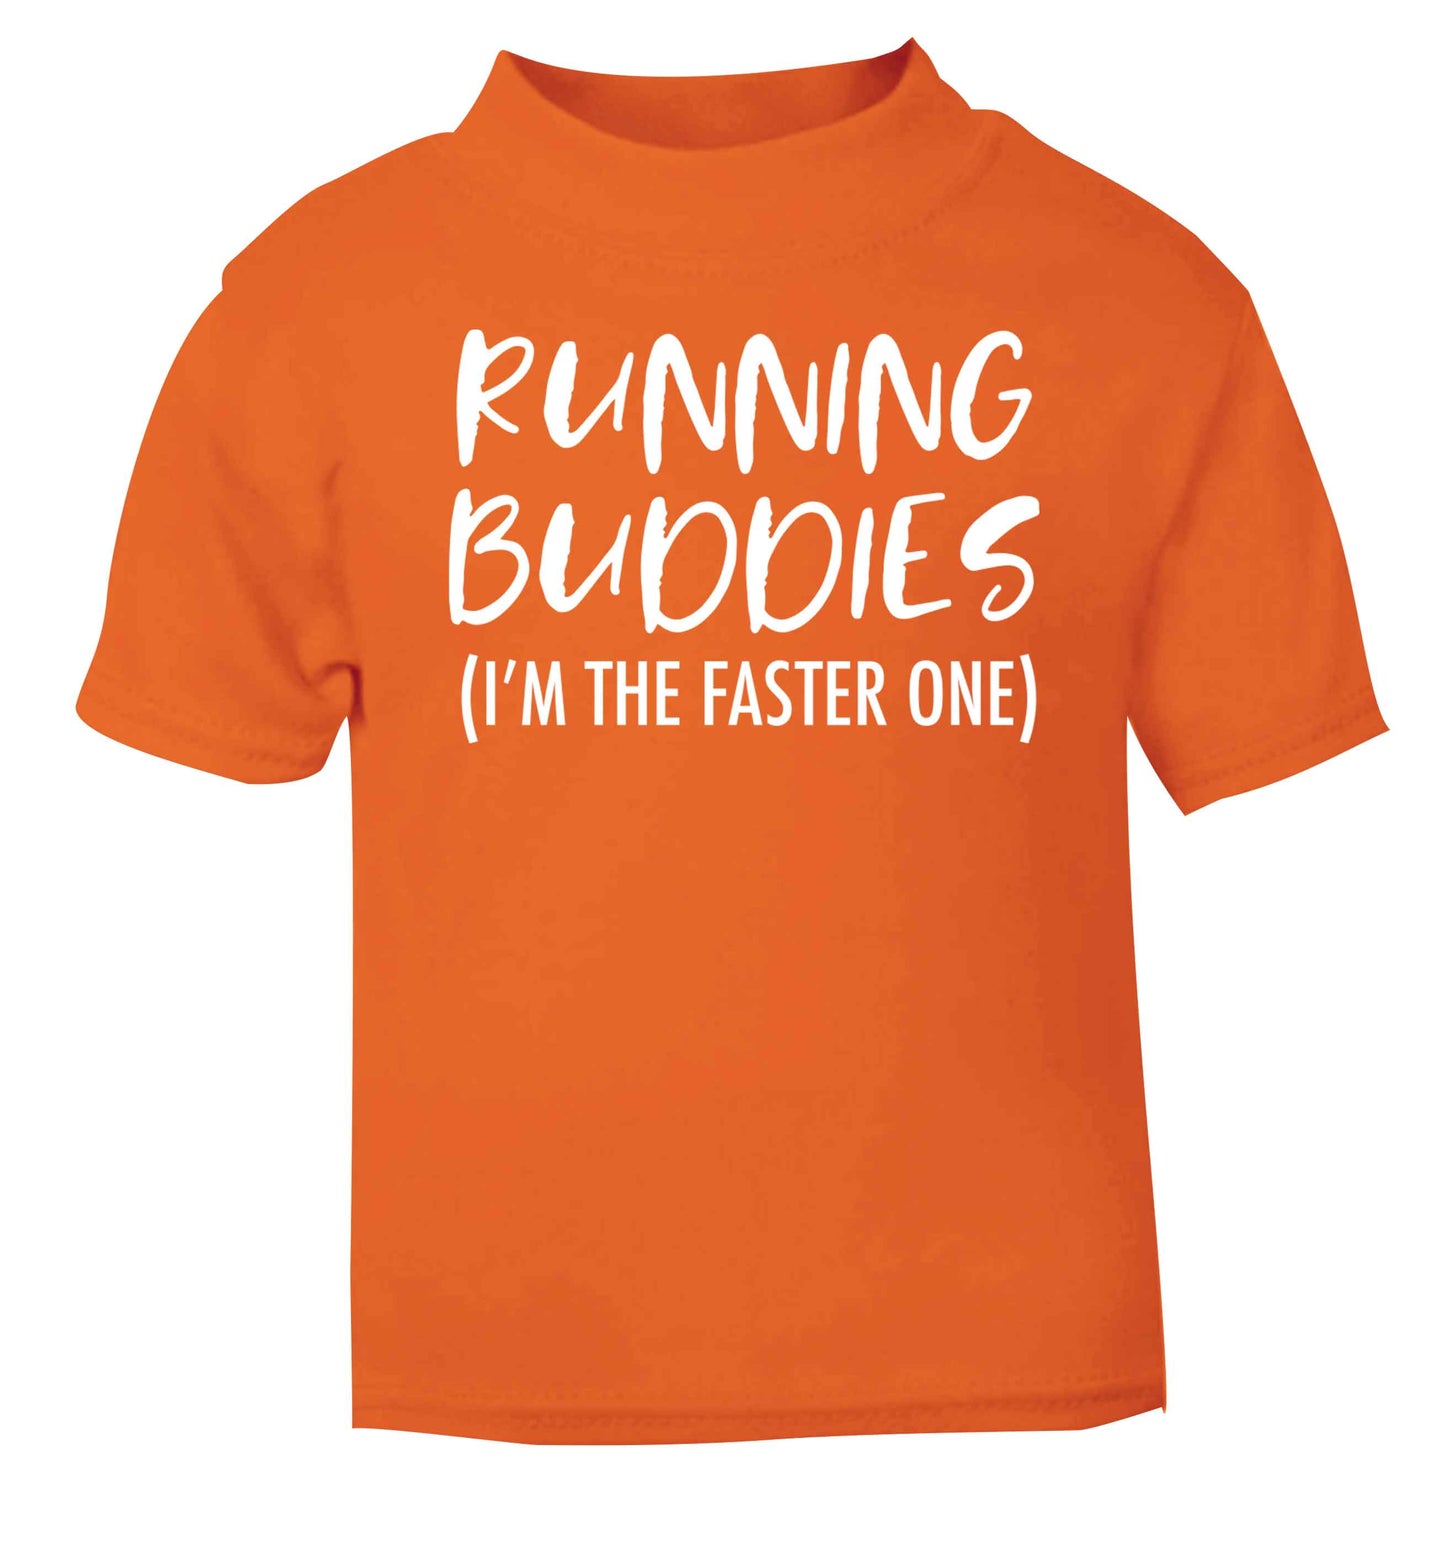 Running buddies (I'm the faster one) orange baby toddler Tshirt 2 Years